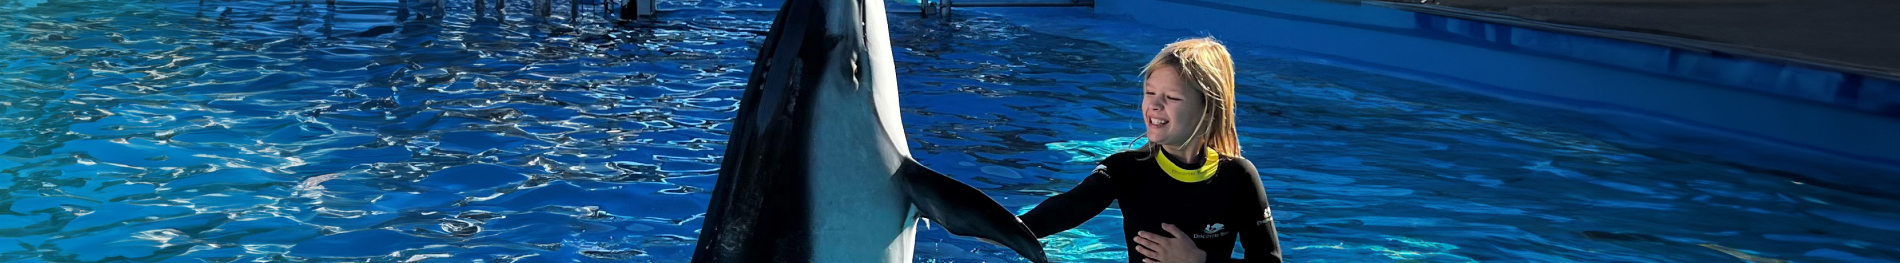 Guest having a Dolphin interaction at SeaWorld San Antonio.